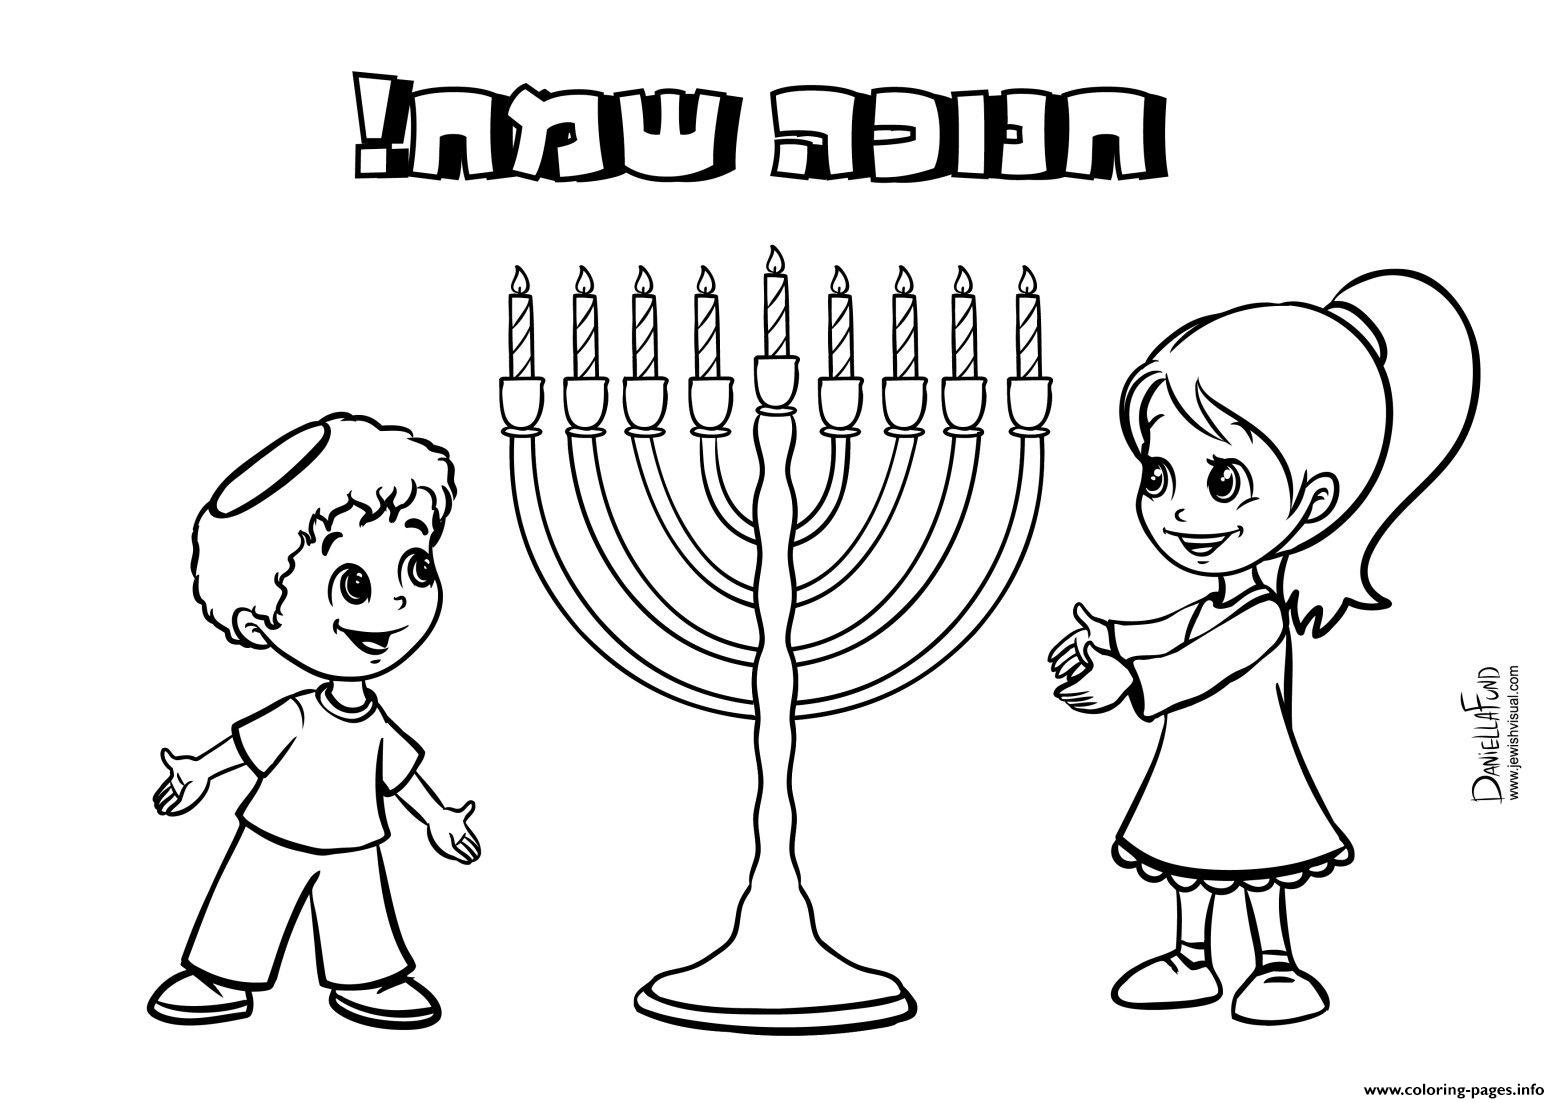 Happy Hanukkah Kids coloring